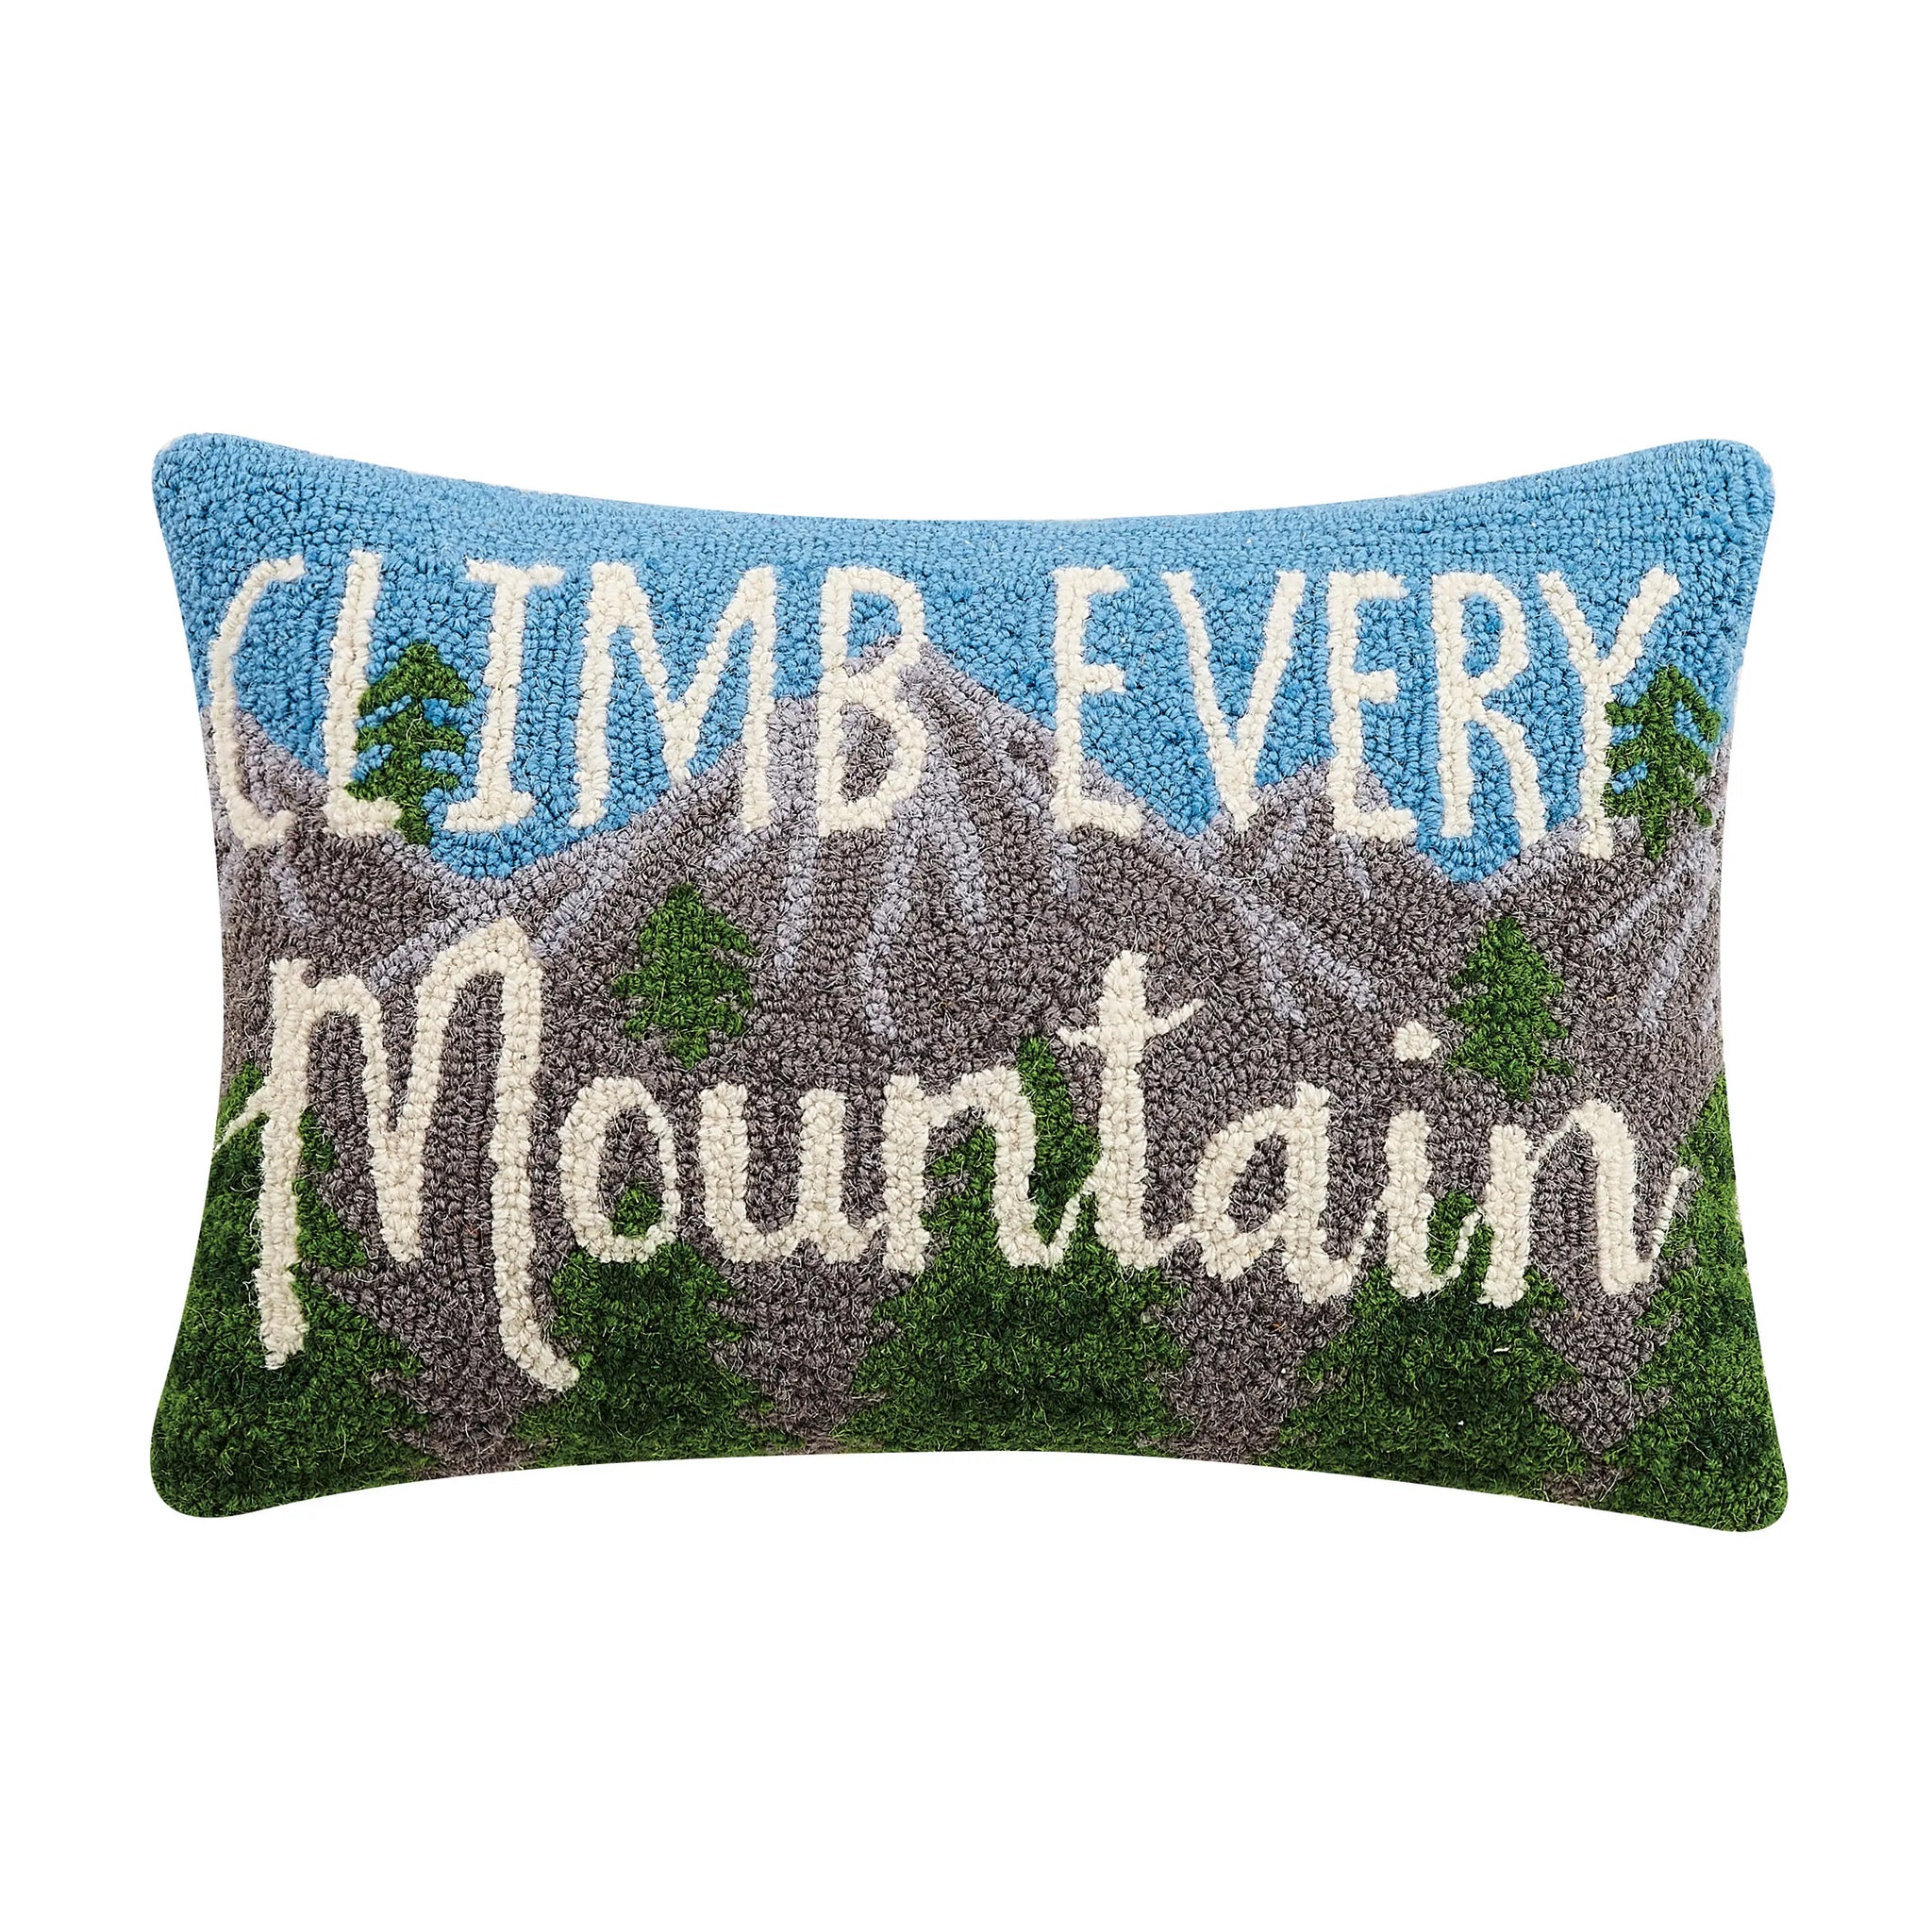 Climb Every Mountain - Hook Pillow